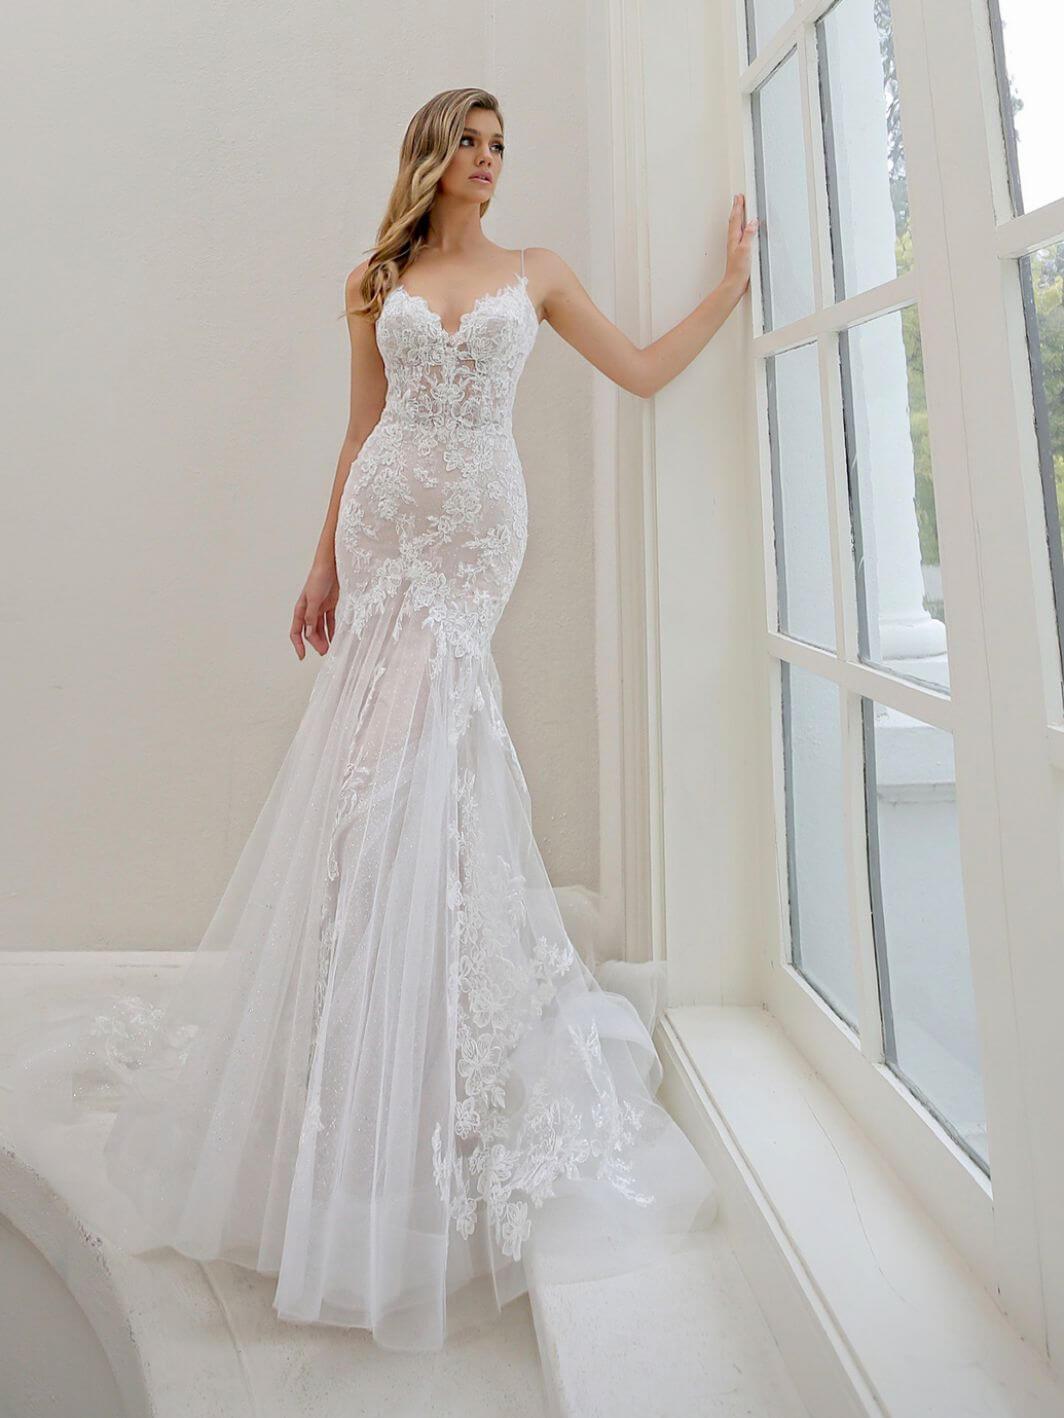 Magnolia Wedding Dress Designed By Enzoani for Blue Collection Now  Available at La Maison Bridal Boutique